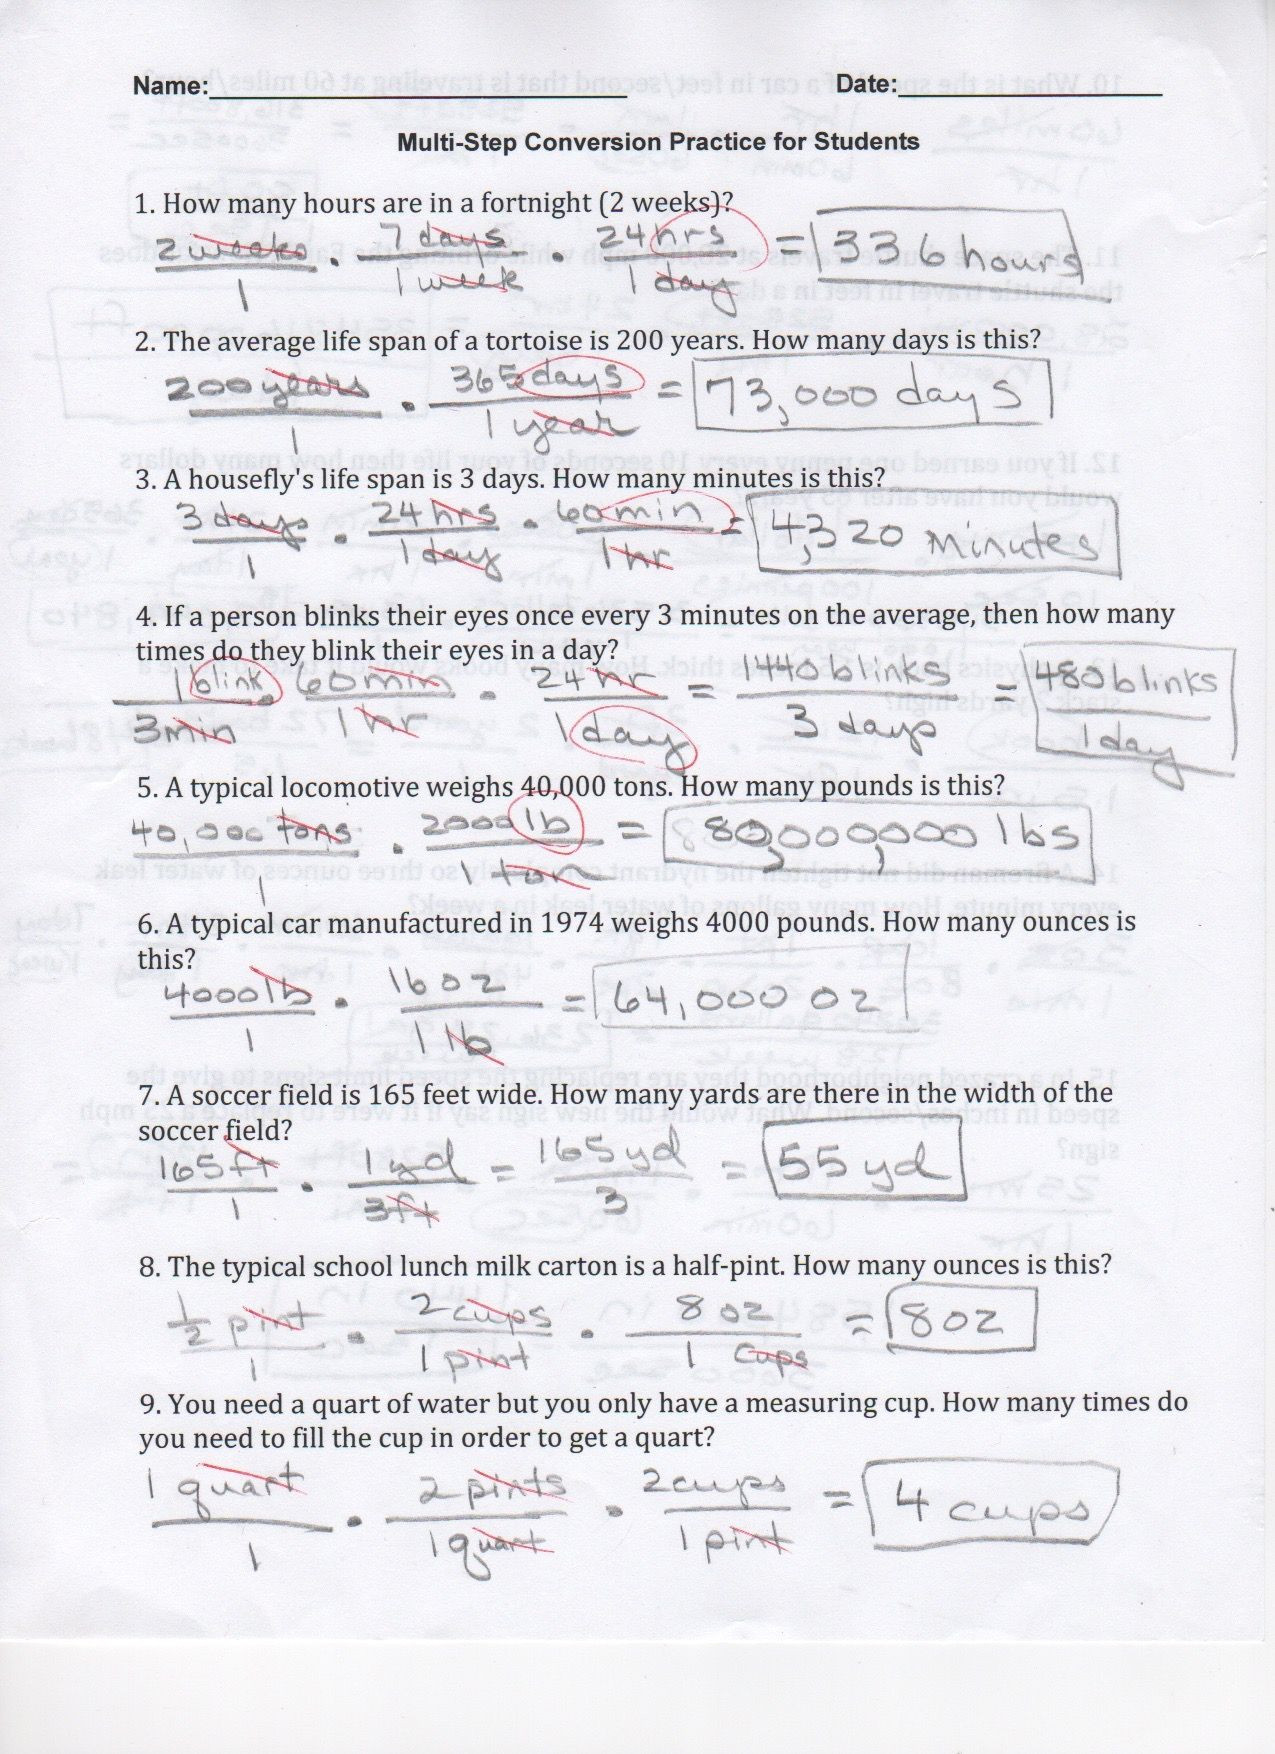 Dimensional Analysis Worksheet Answers Chemistry 29 Chemistry Dimensional Analysis Worksheet Answers